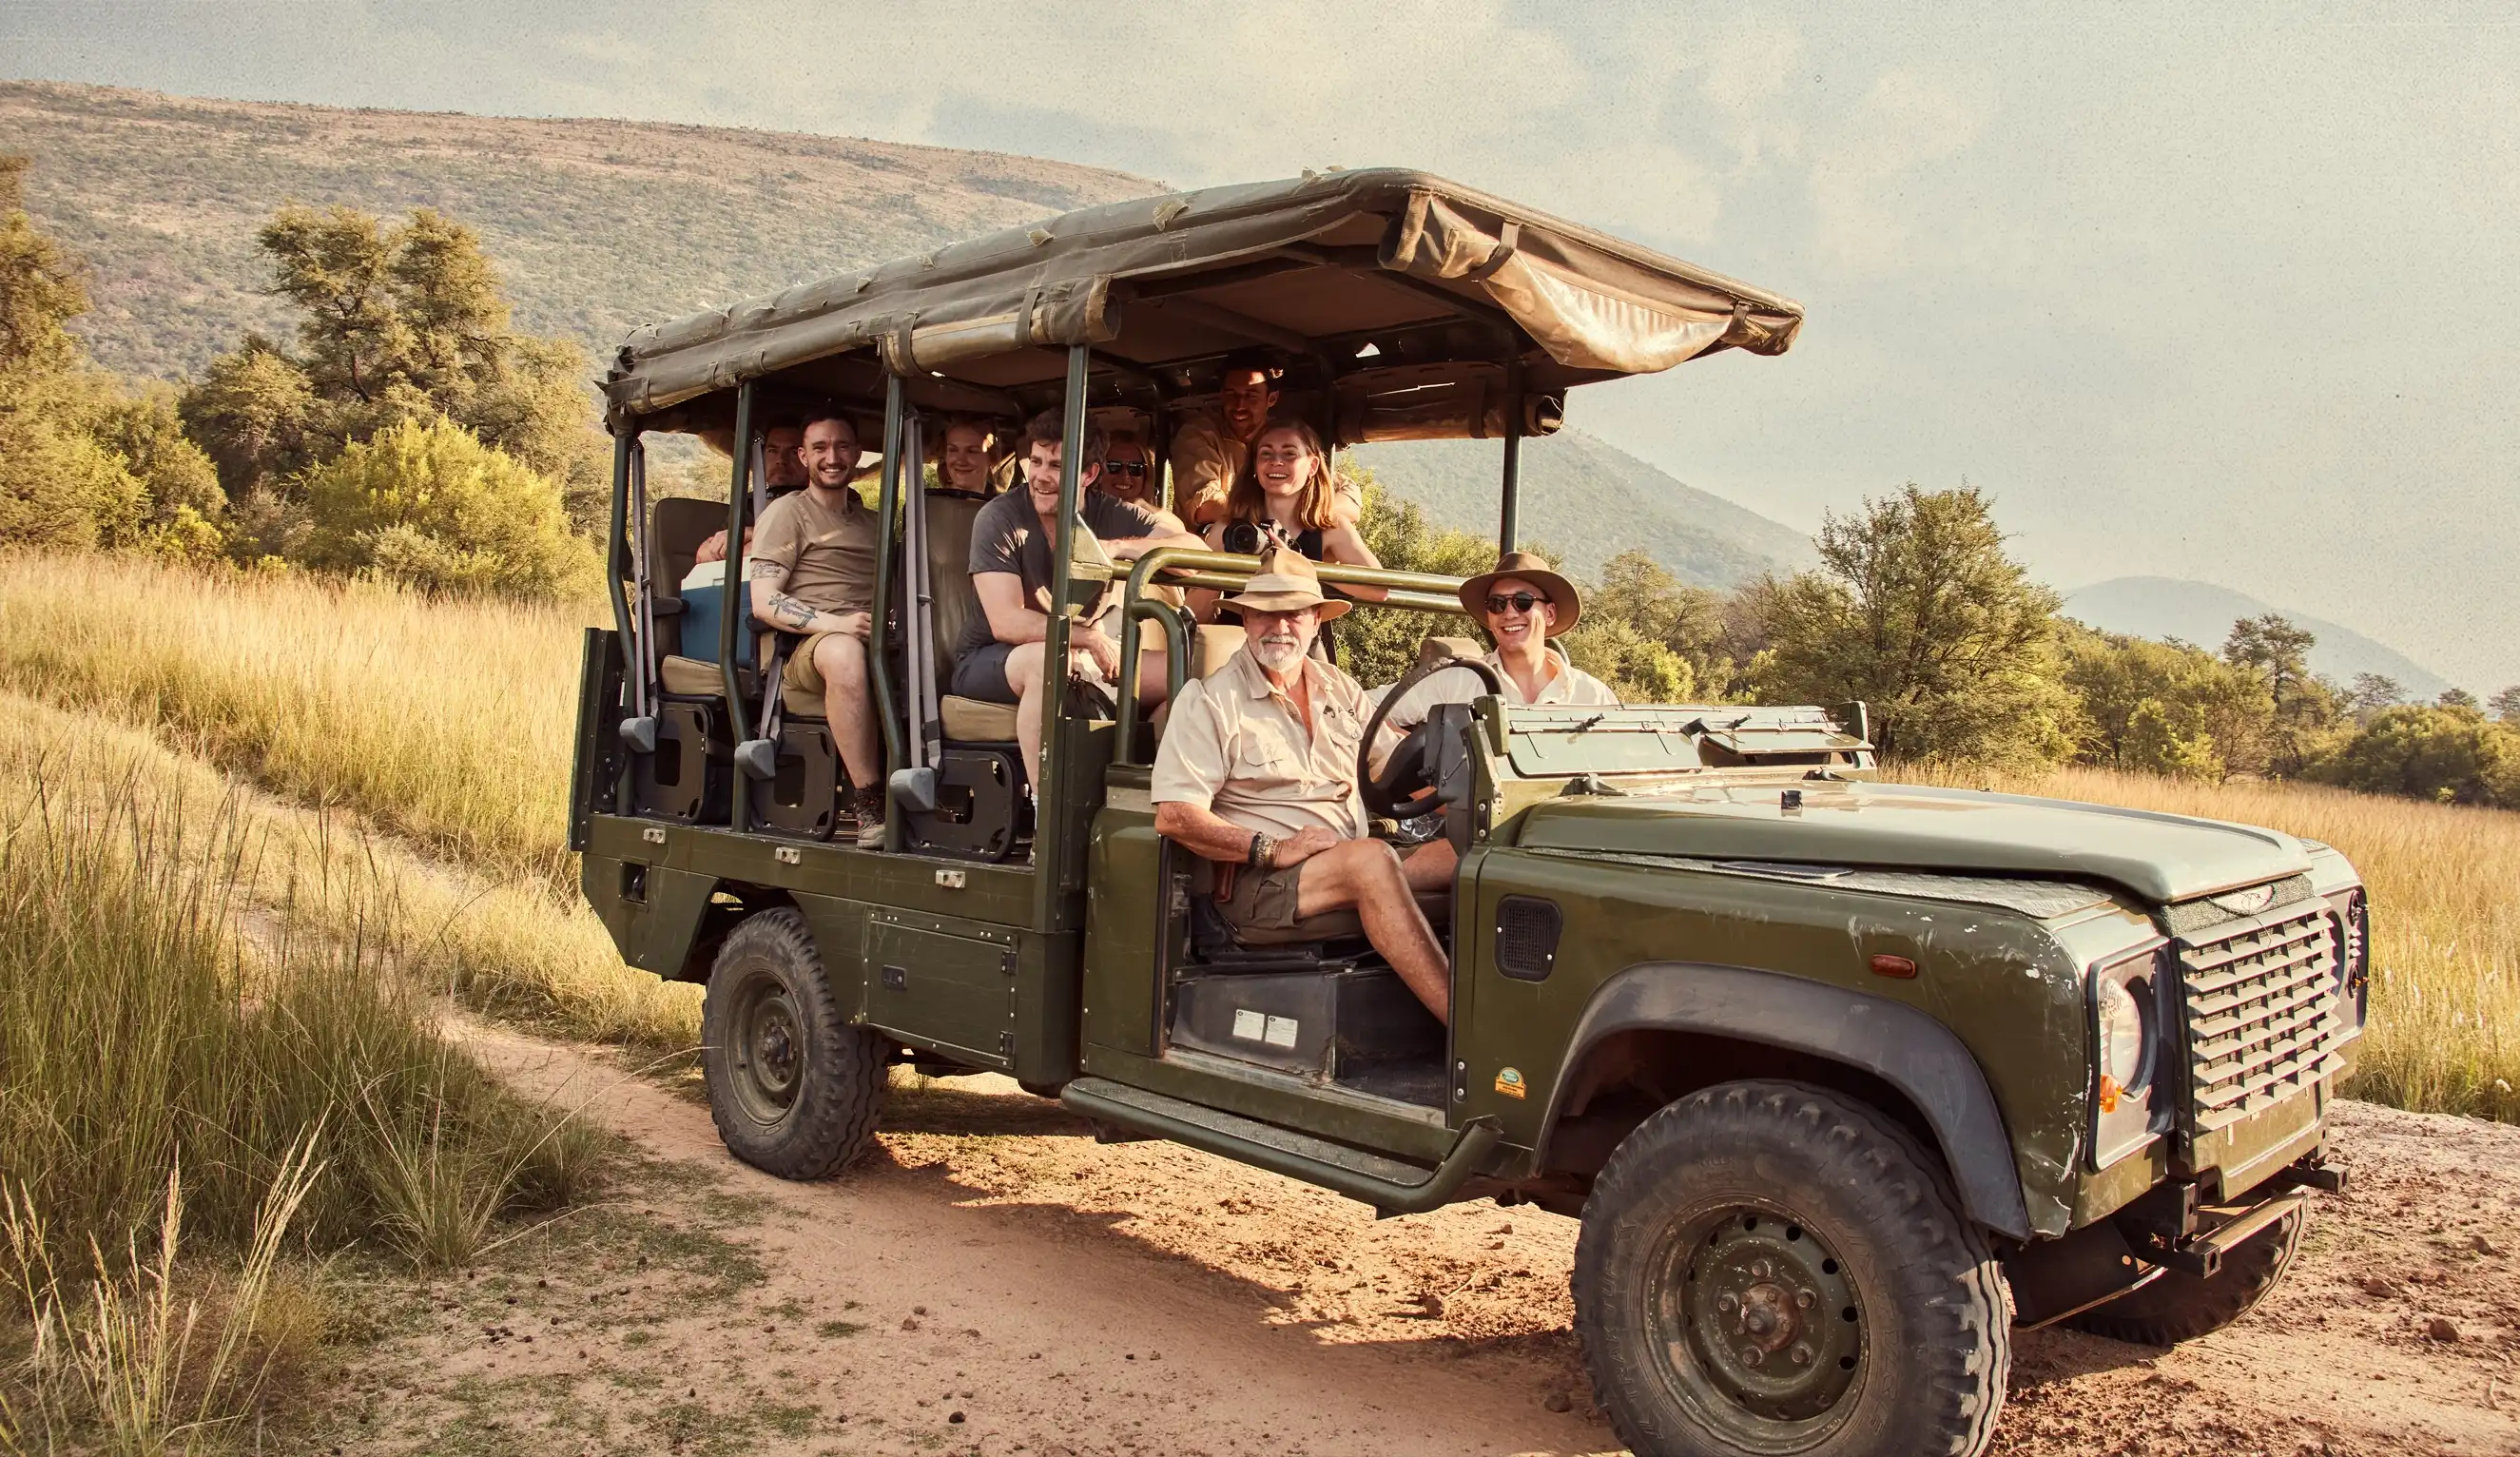 Big group sitting in safari truck amid the savanna